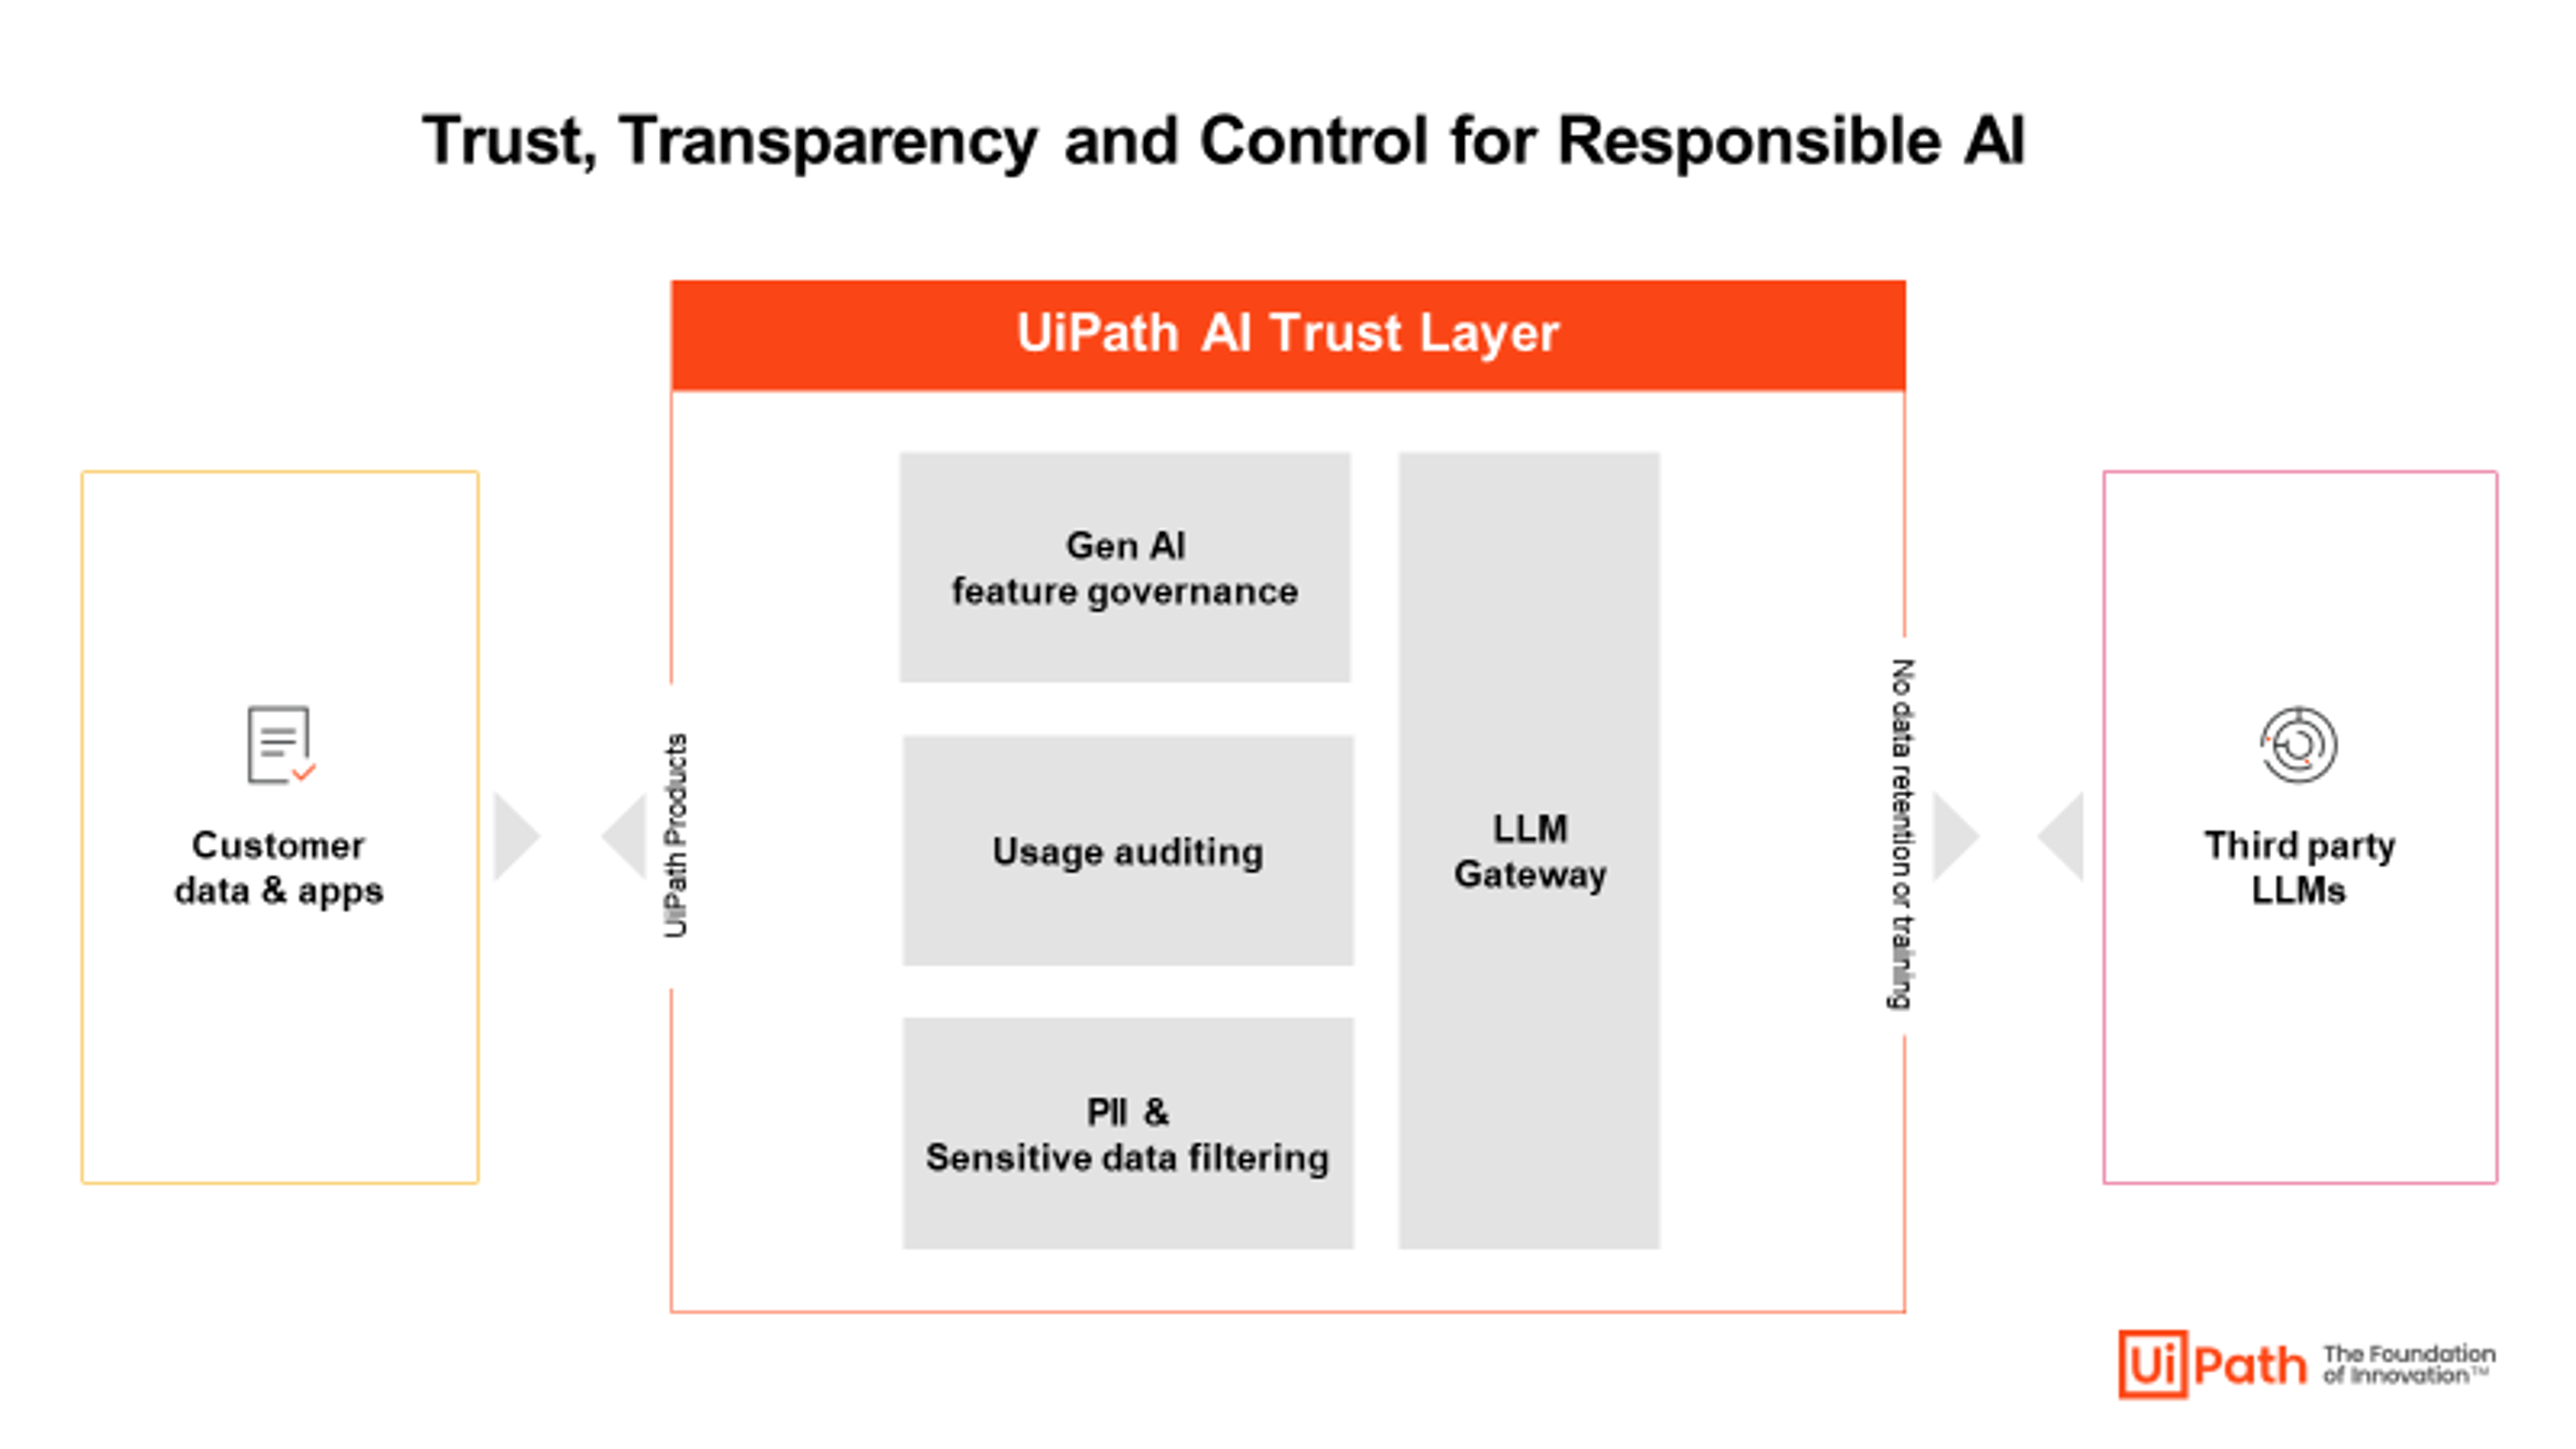 UiPath AI Trust Layer